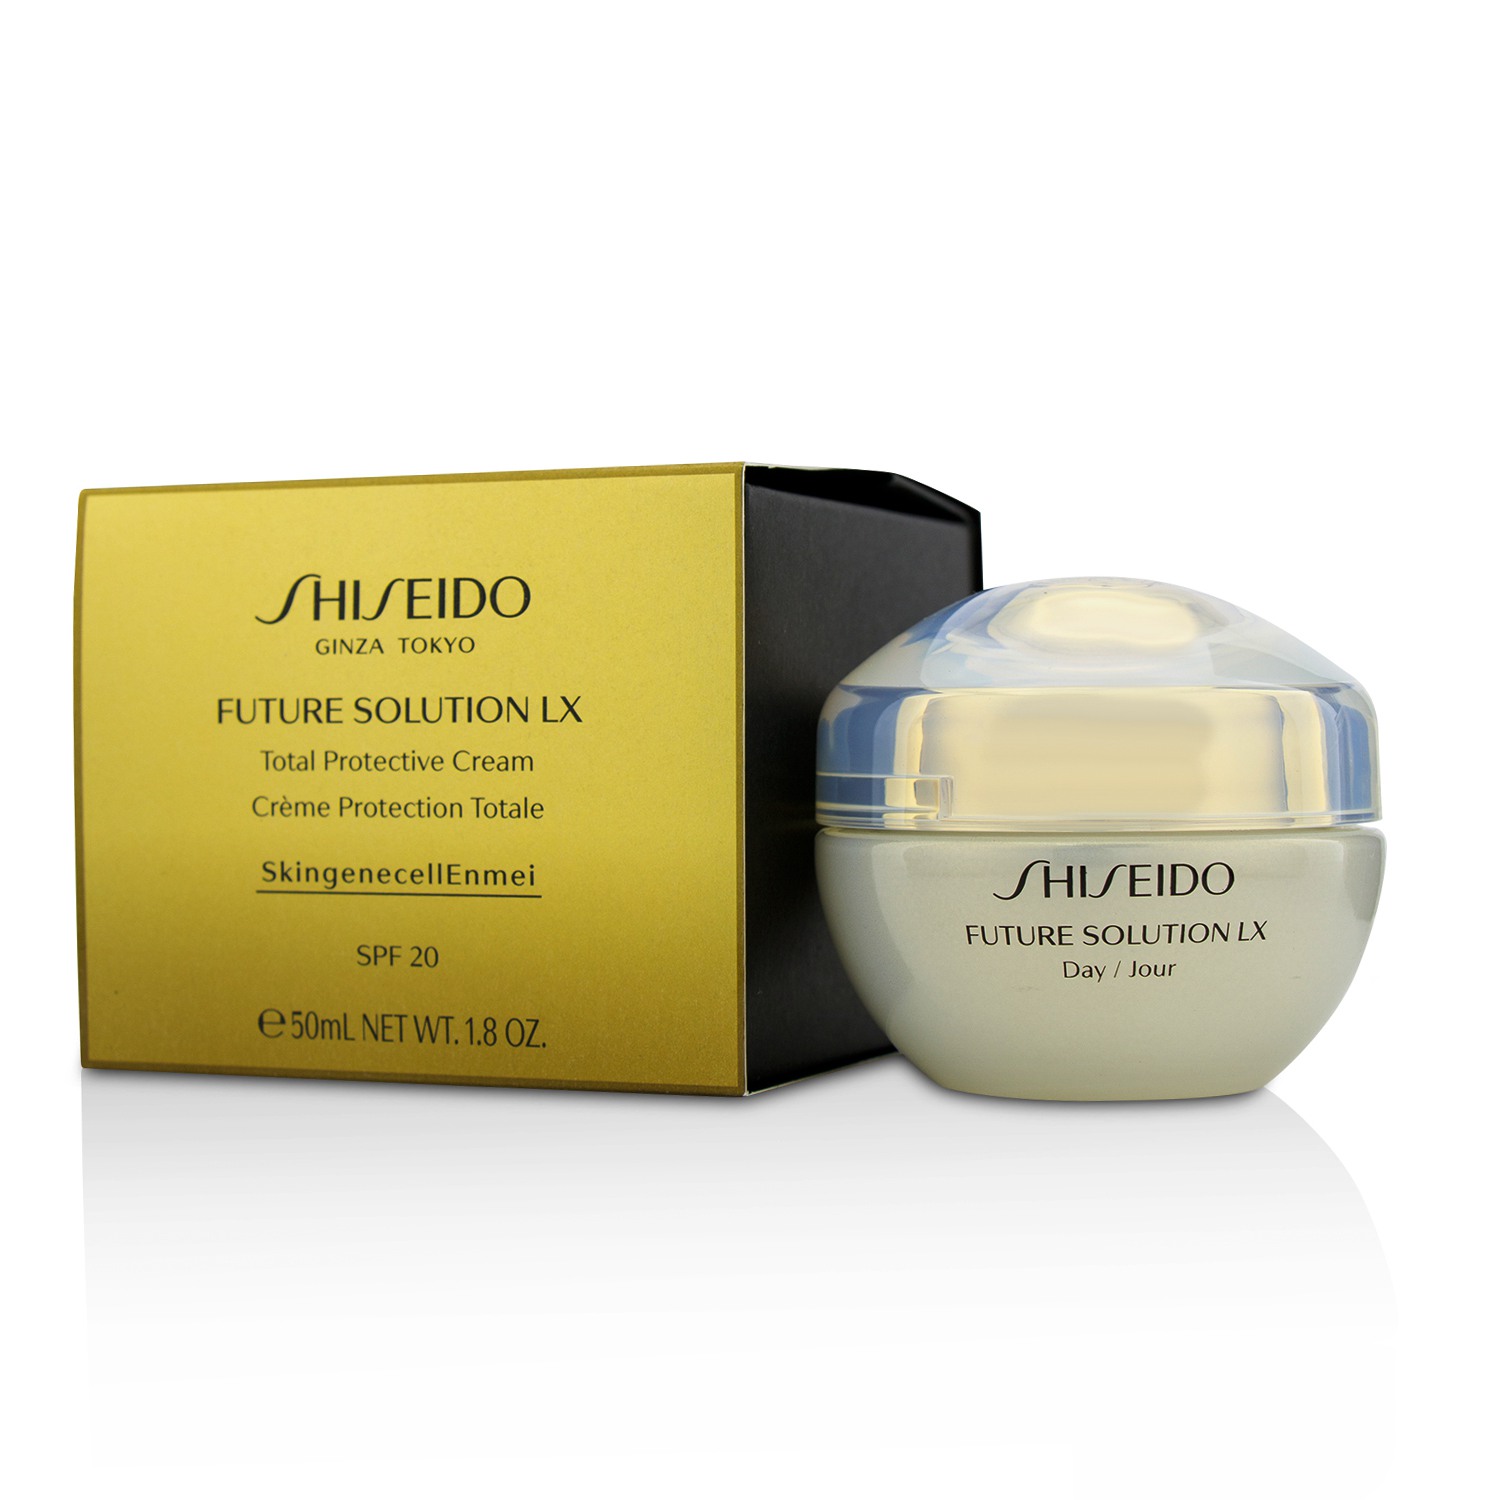 Future Solution LX Total Protective Cream SPF 20 Shiseido Image